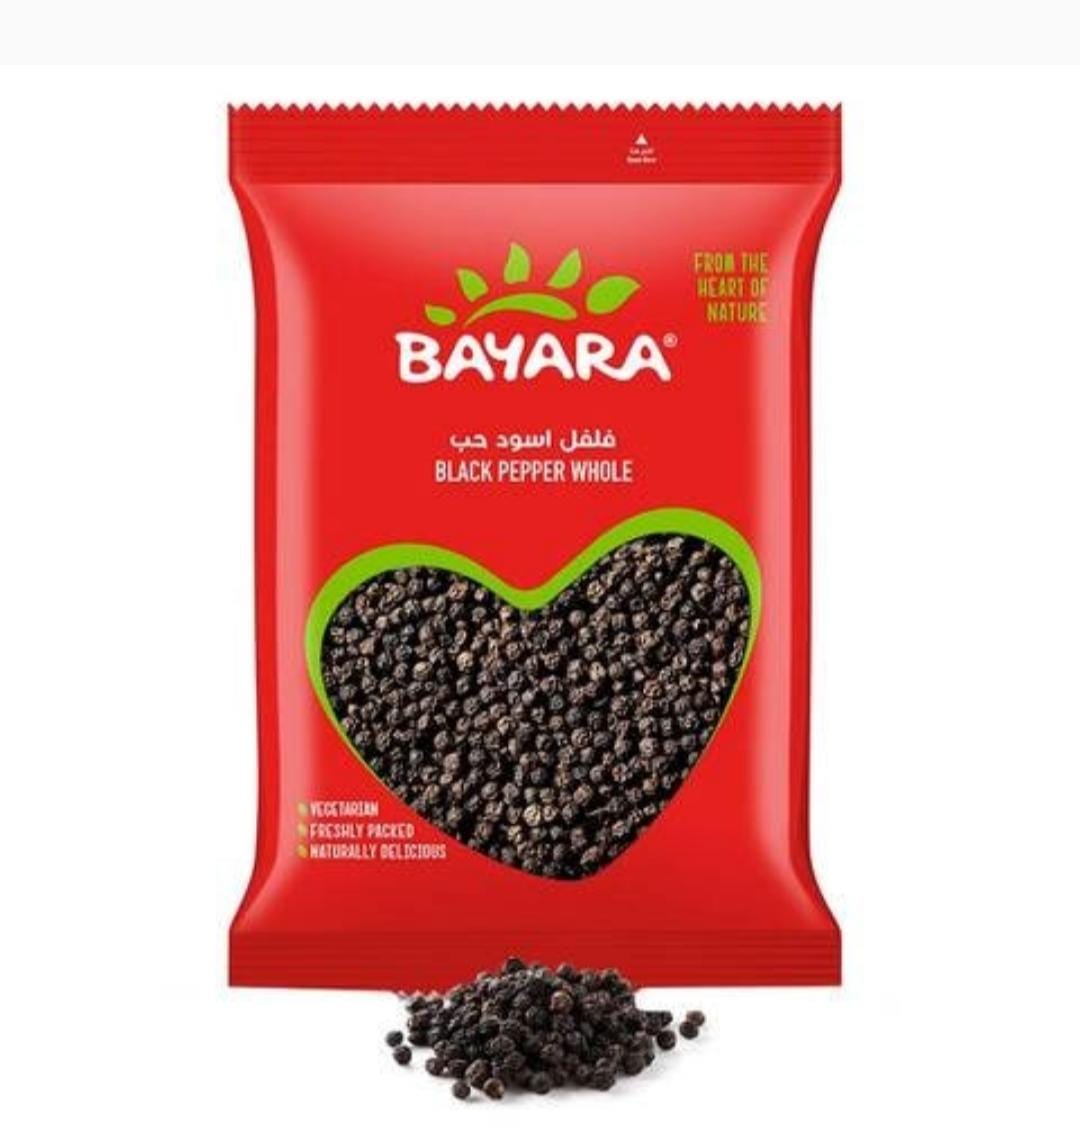 Bayara black pepper whole (pkt/200gm)